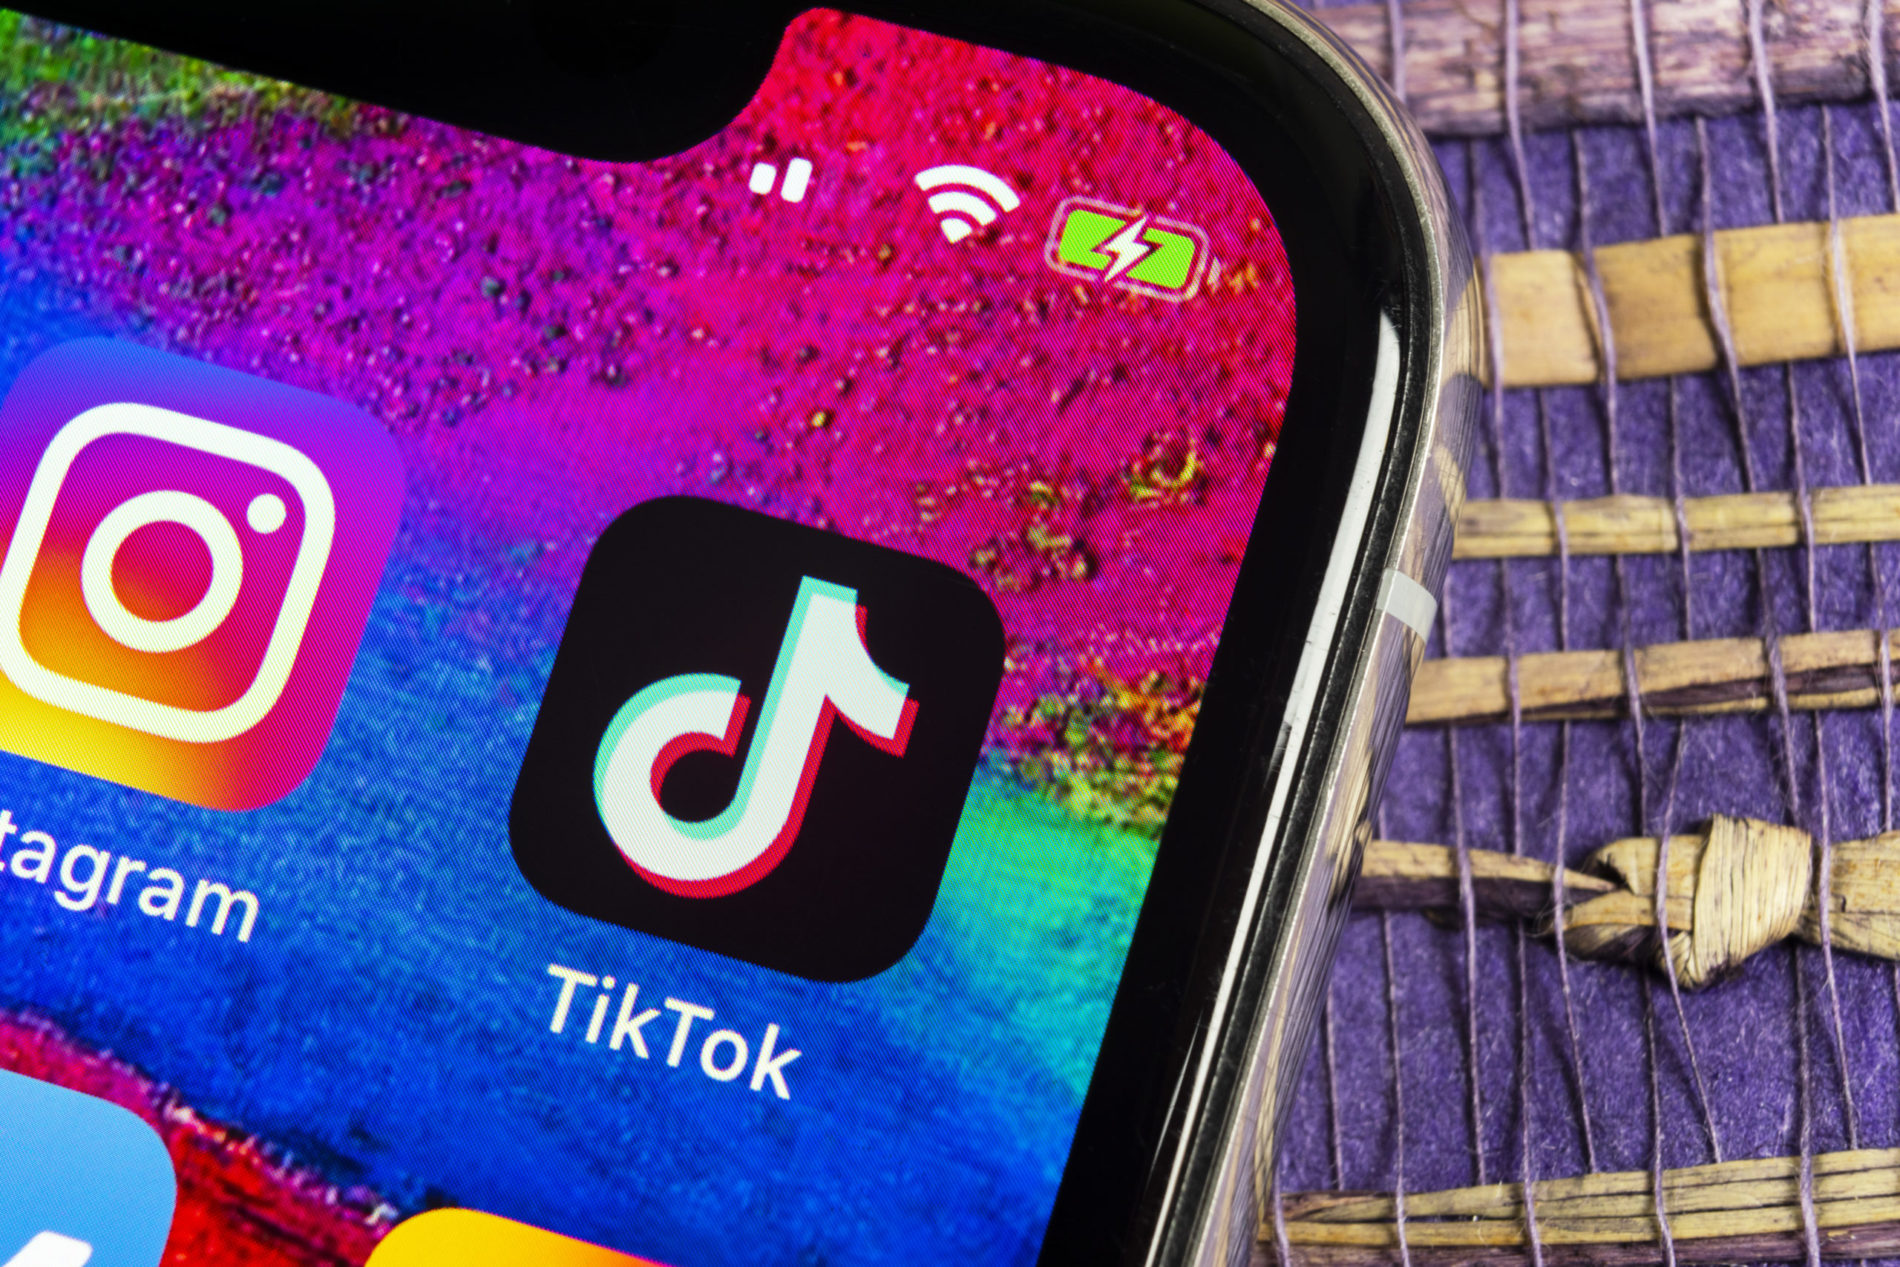 New tasks are becoming a web sensation on TikTok